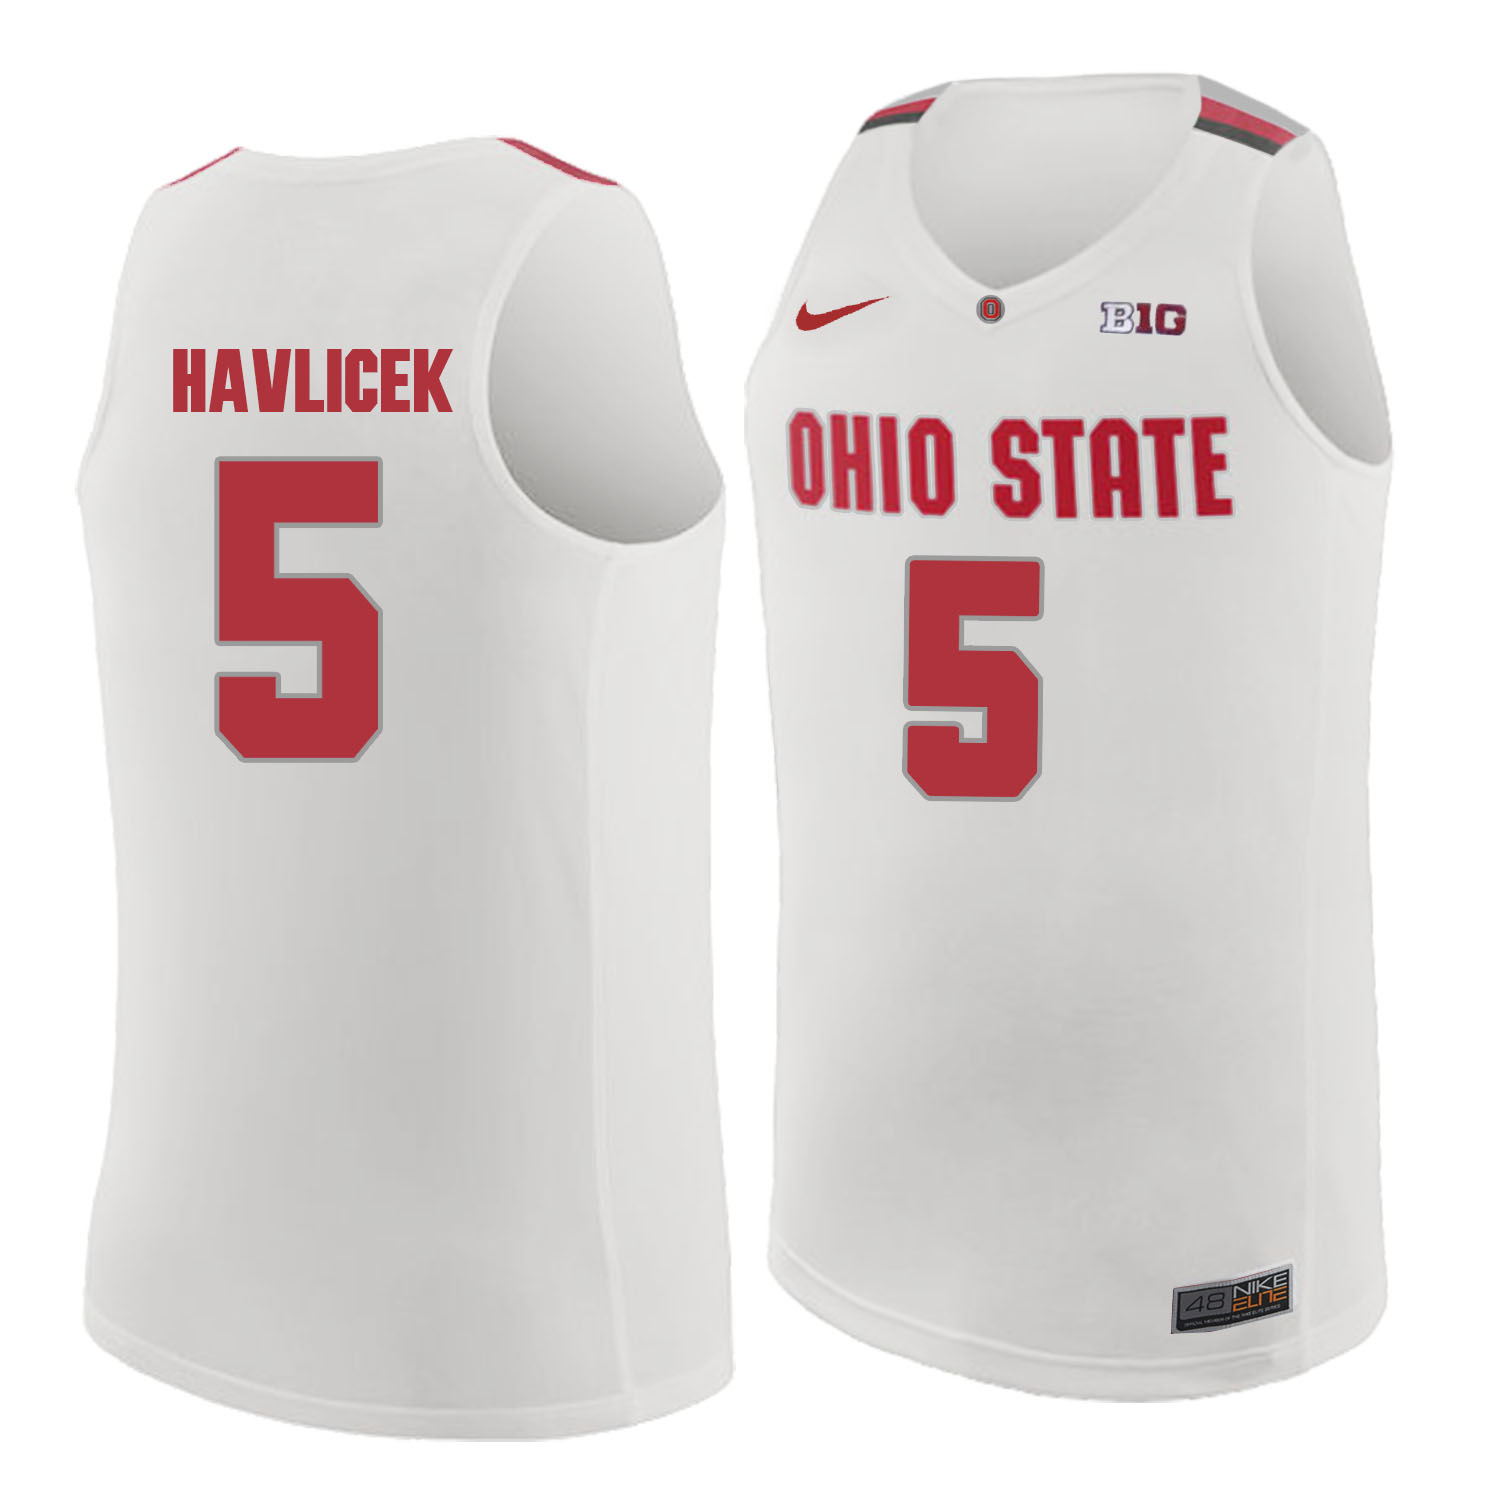 Ohio State Buckeyes 5 John Havlicek White College Basketball Jersey